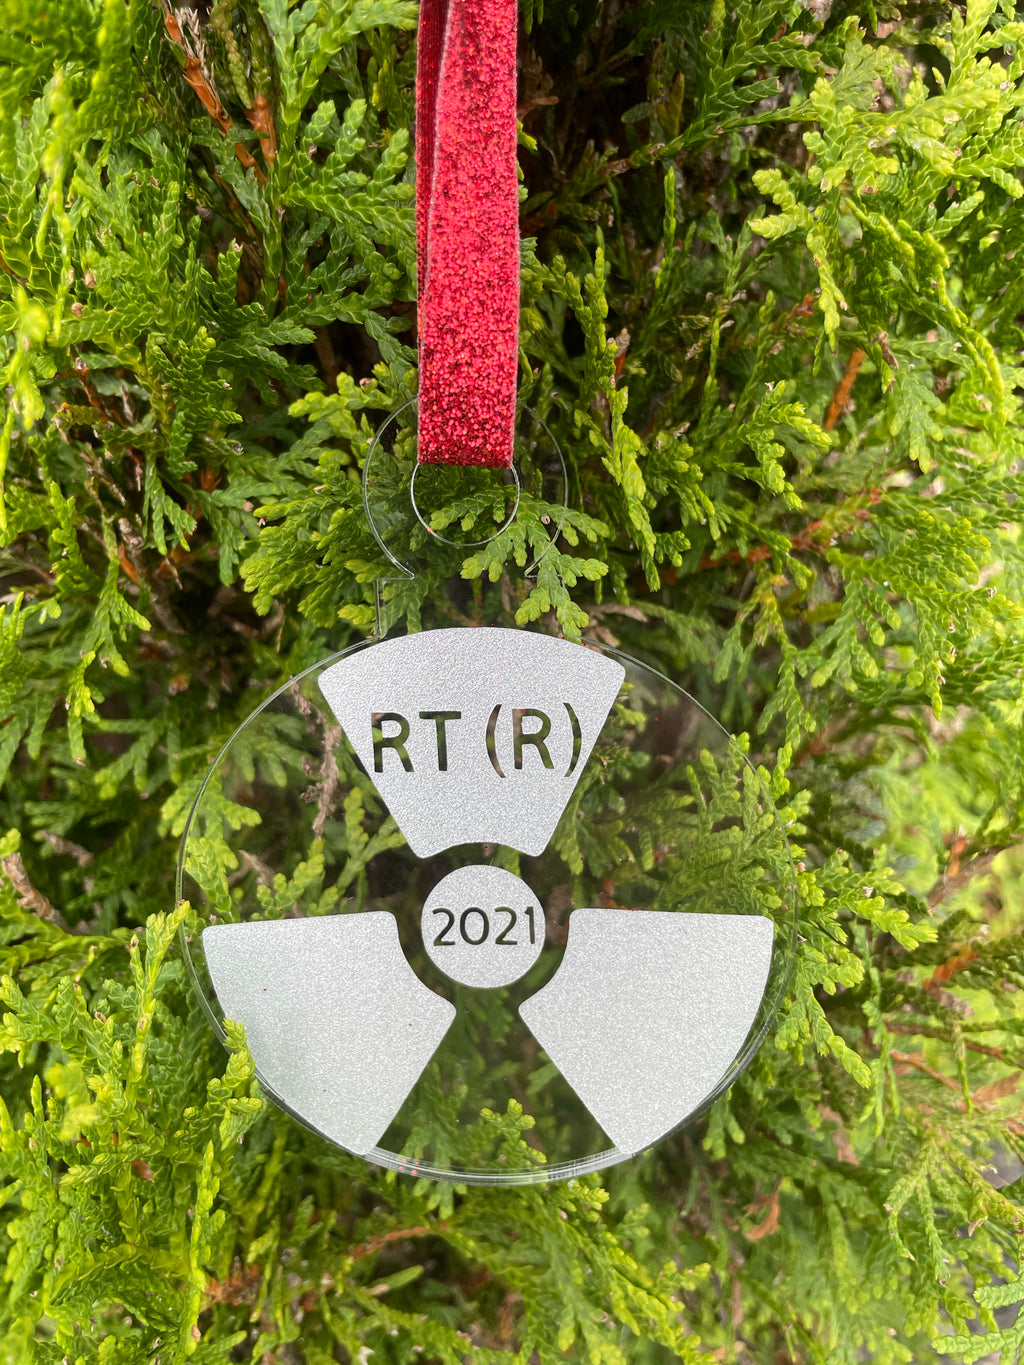 Rad Tech Christmas Ornament, Radiology, Ornament, Xray